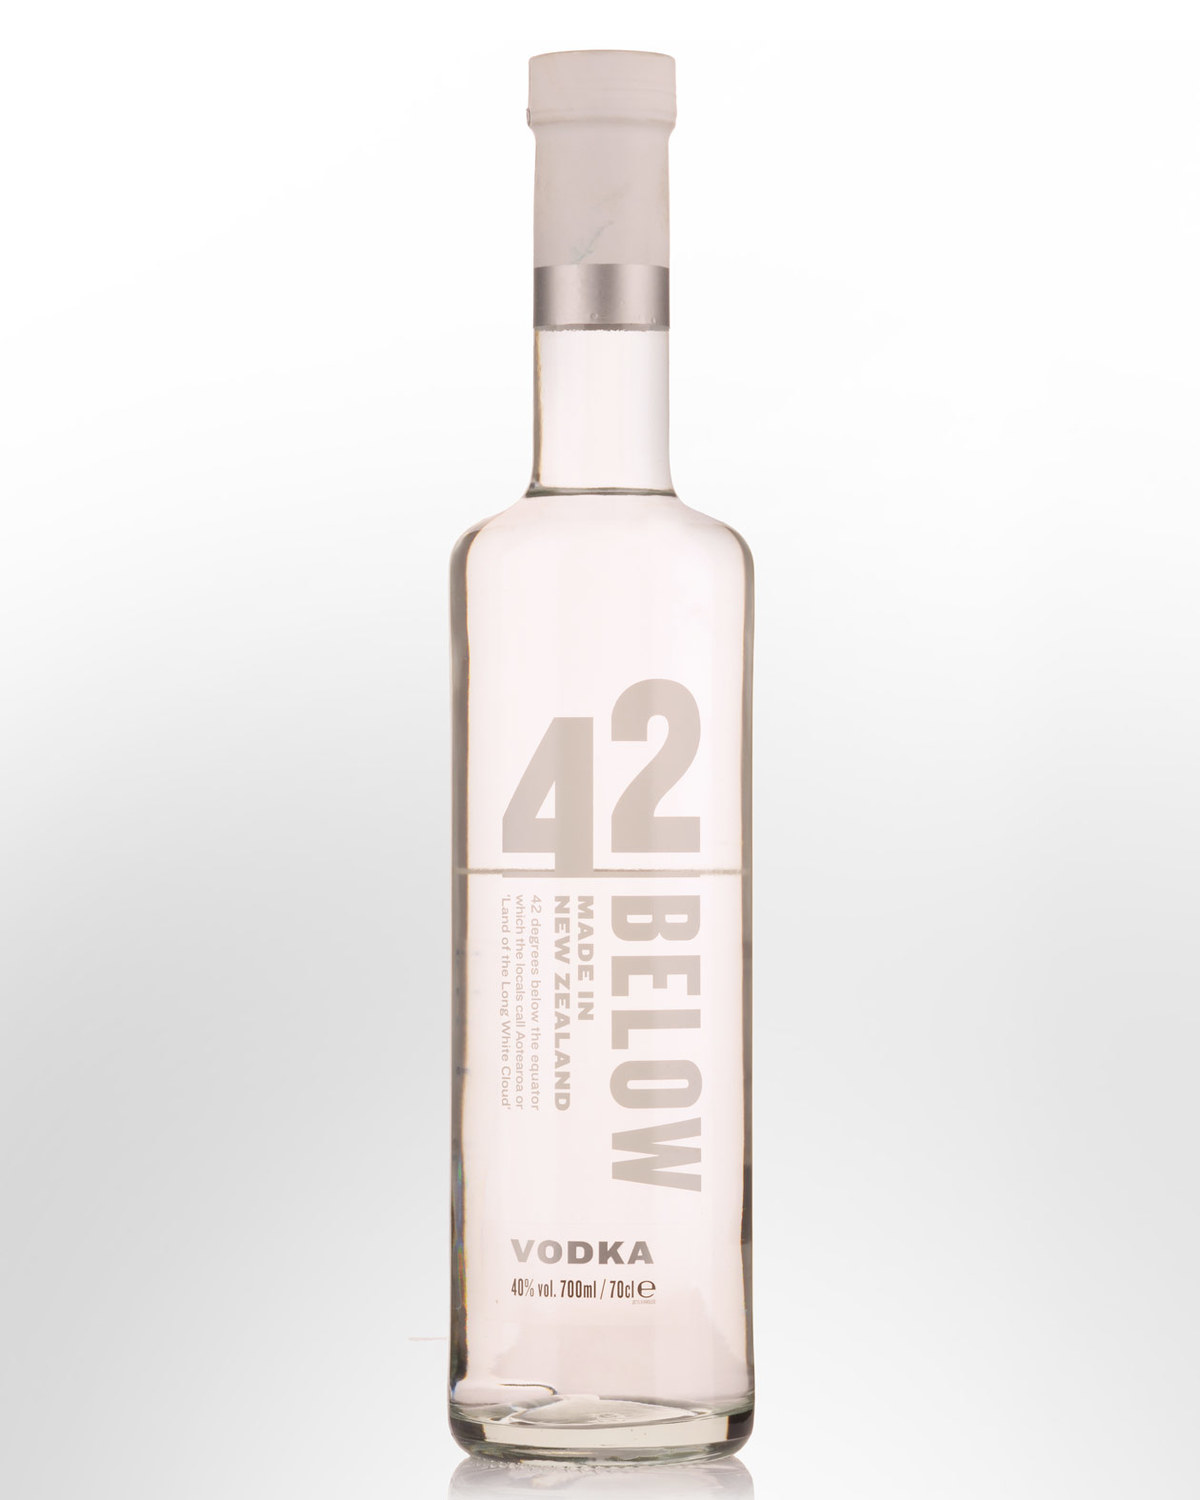 42 below vodka cocktails